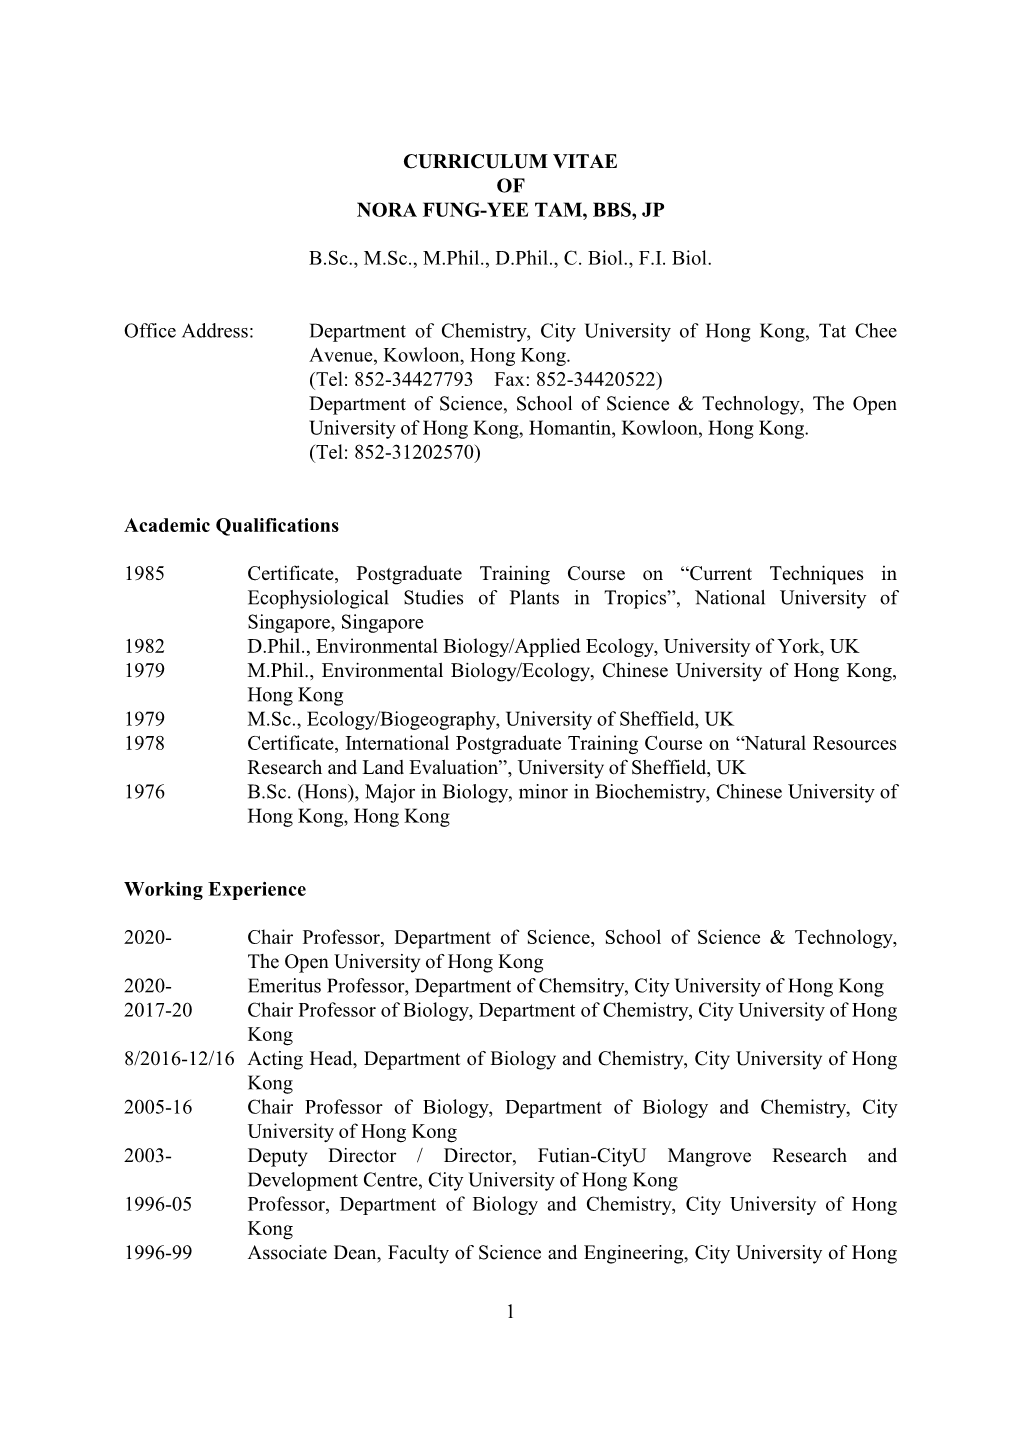 Curriculum Vitae of Nora Fung-Yee Tam, Bbs, Jp